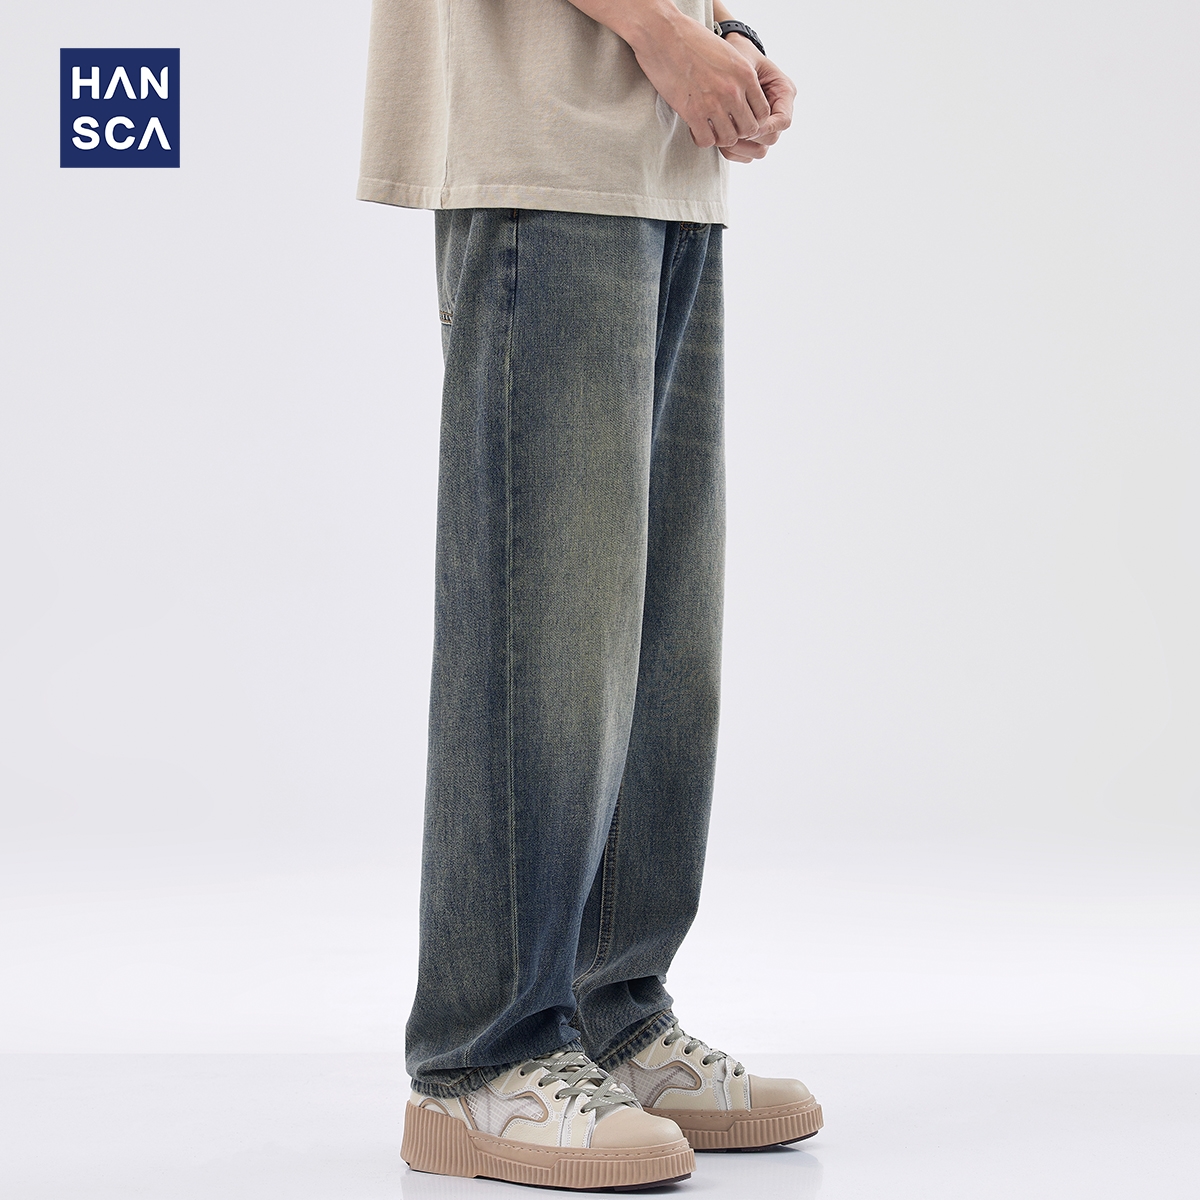 hansca美式复古水洗牛仔裤男夏季新款直筒宽松高端潮牌阔腿长裤子